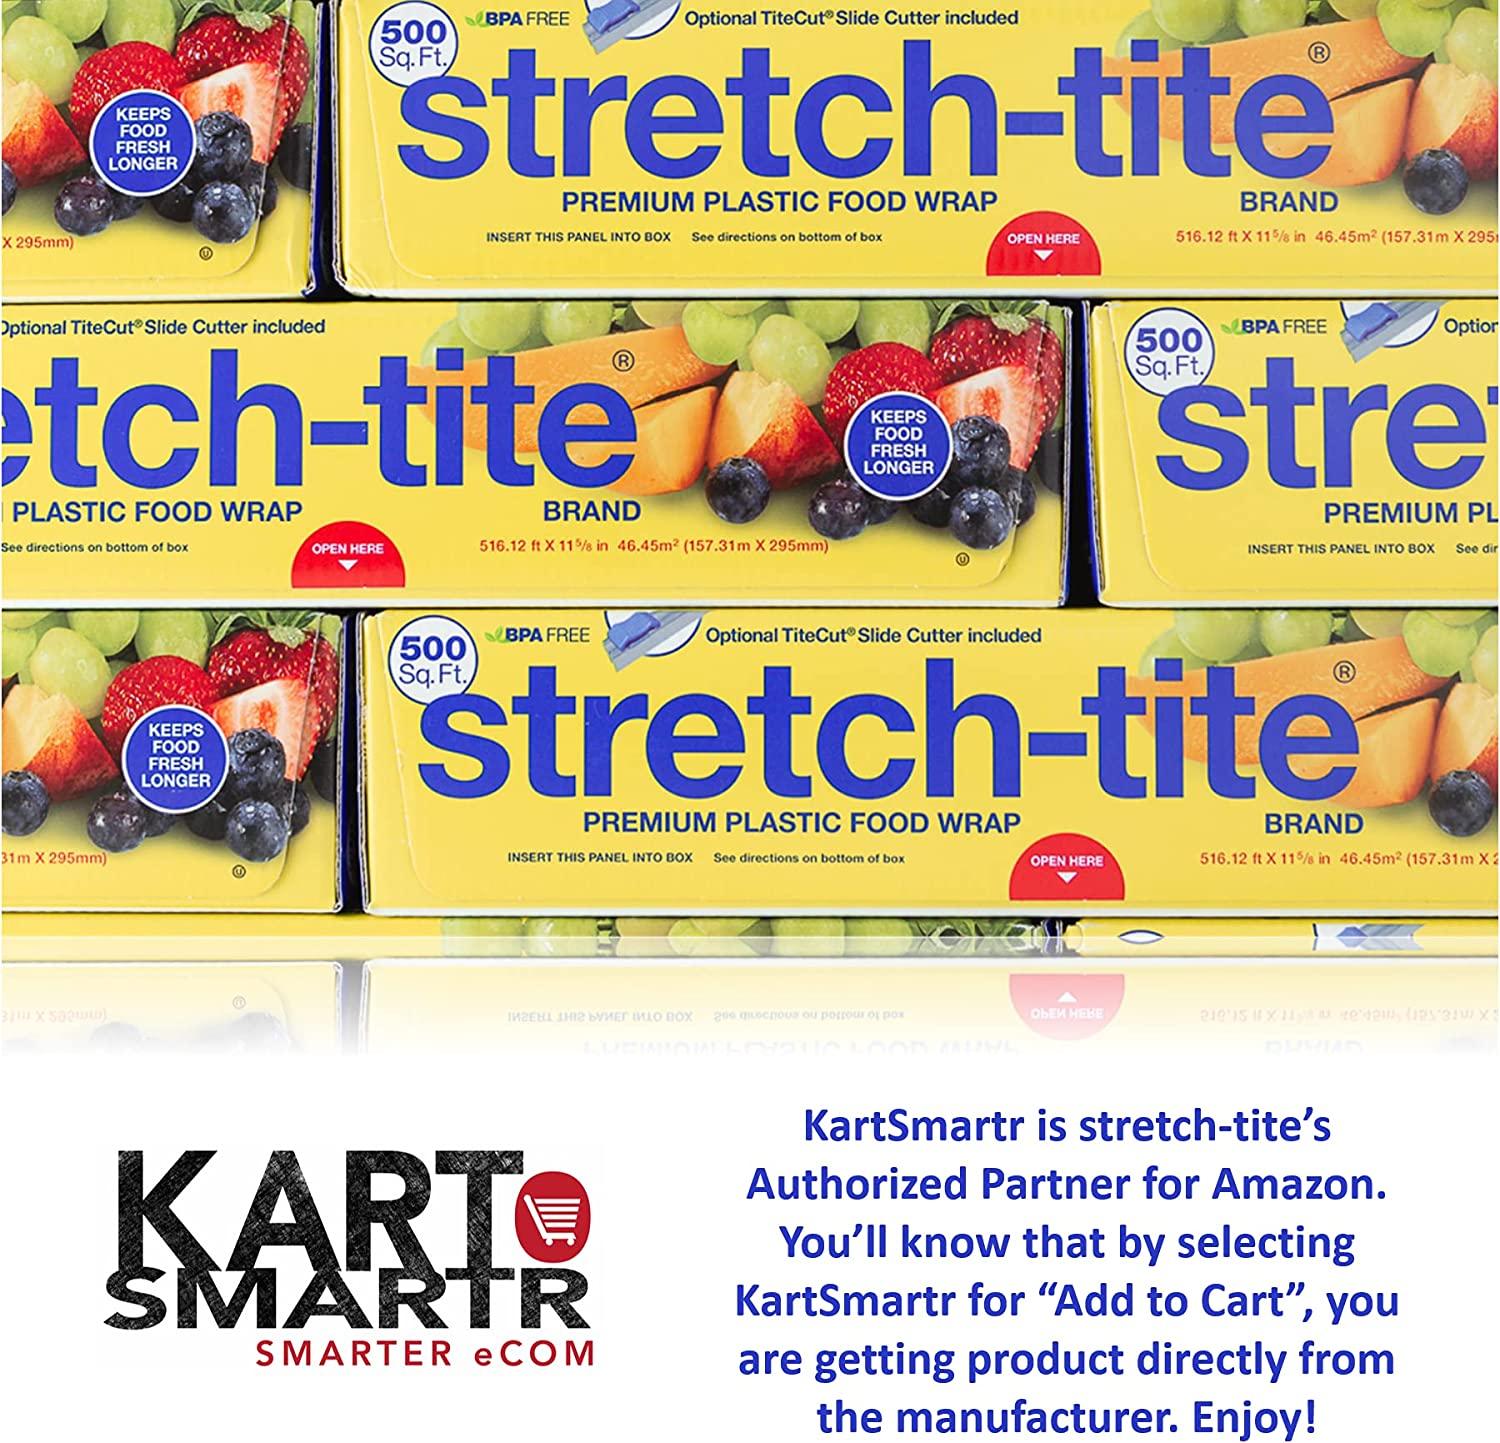 Stretch-Tite Premium Plastic Food Wrap, Includes Slide Cutter